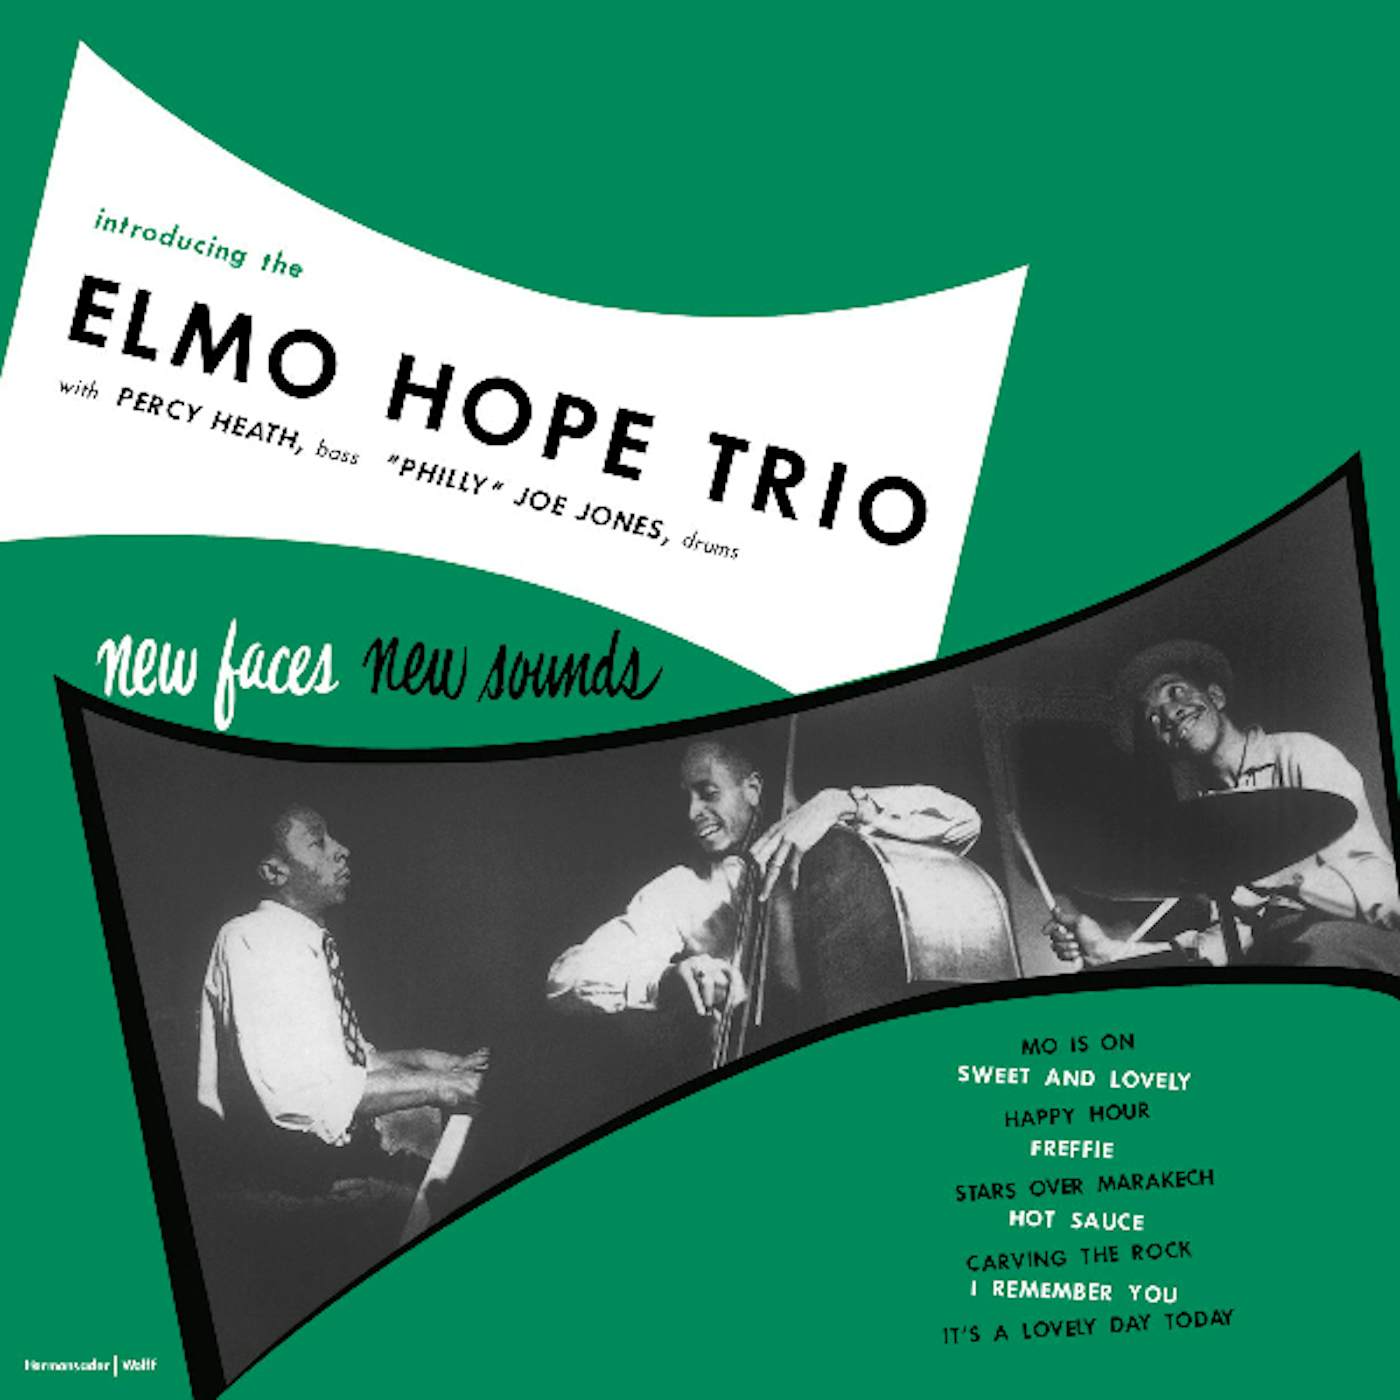 Elmo Hope New Faces New Sounds Vinyl Record